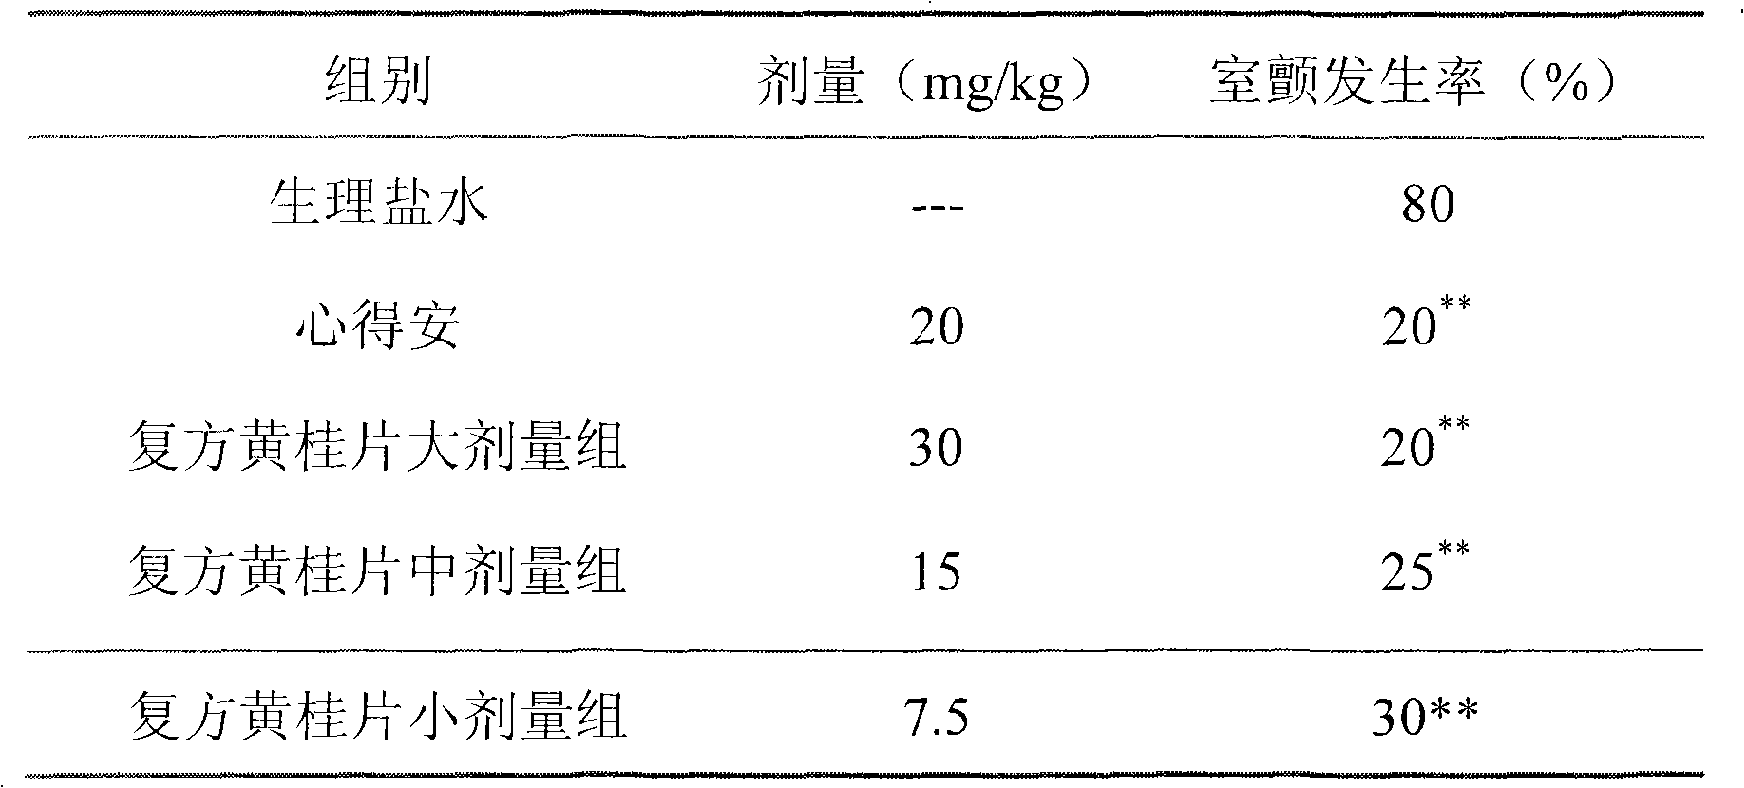 Medicament composition containing protoberberine type alkaloids